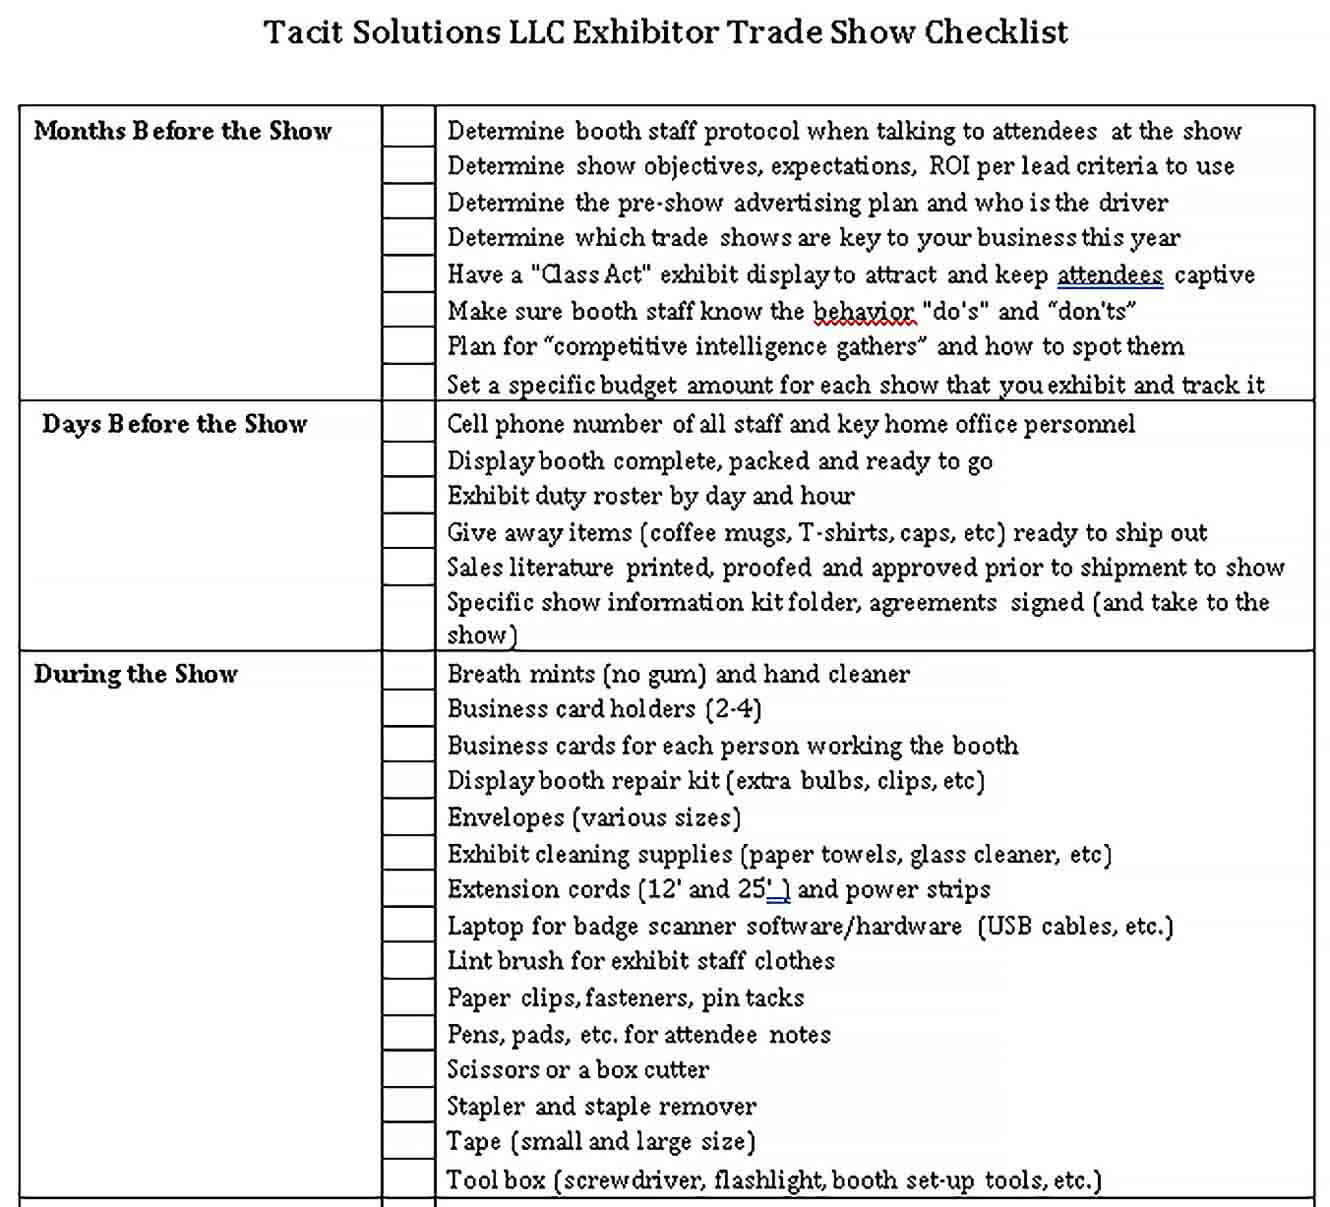 Sample Standard Trade Show Checklist